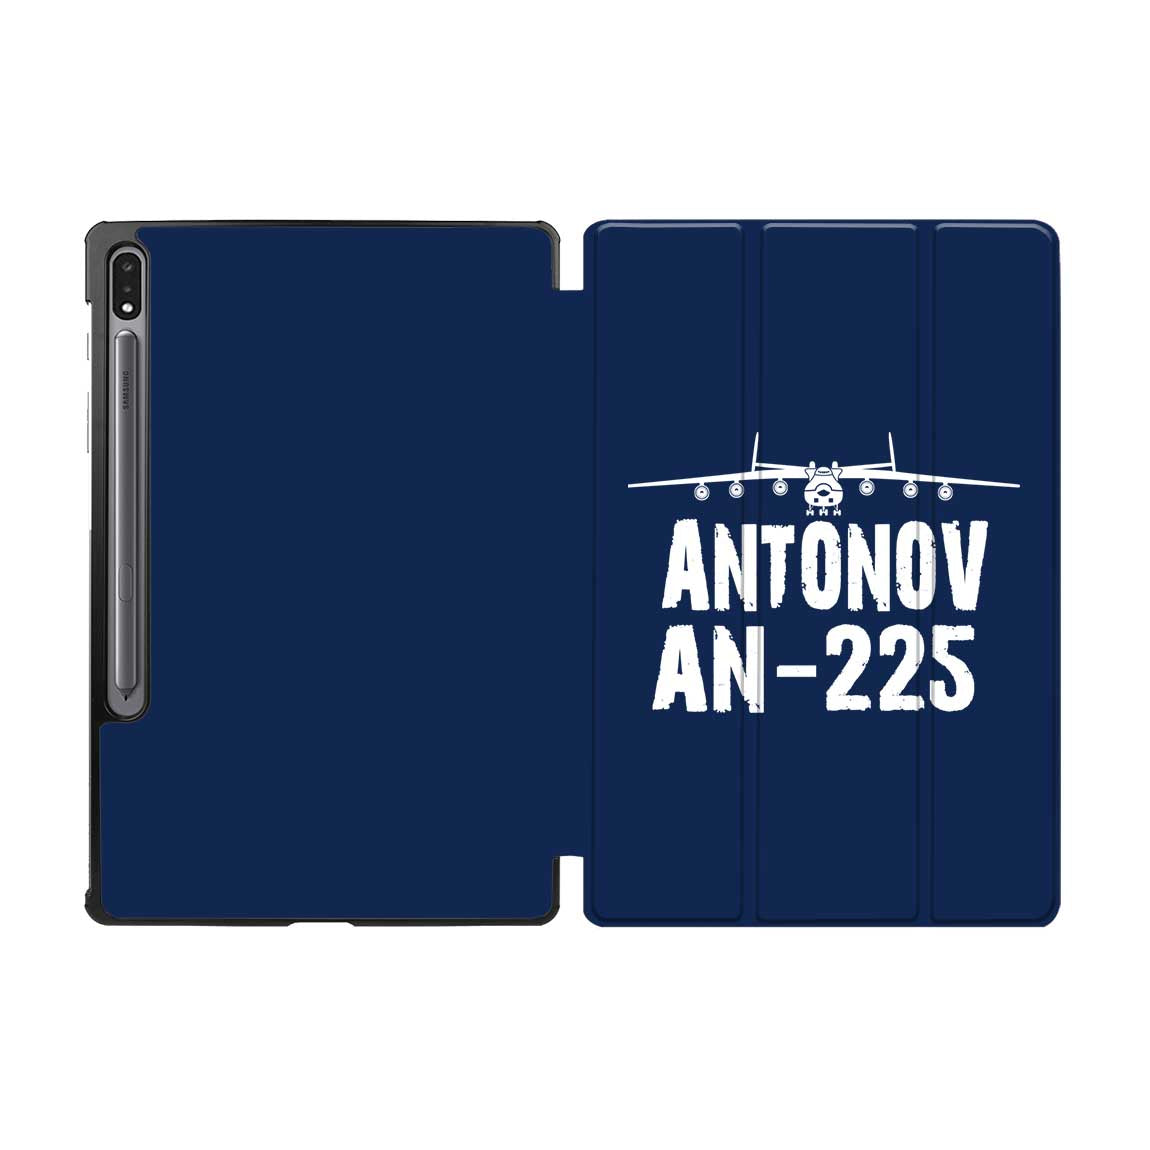 Antonov AN-225 & Plane Designed Samsung Tablet Cases